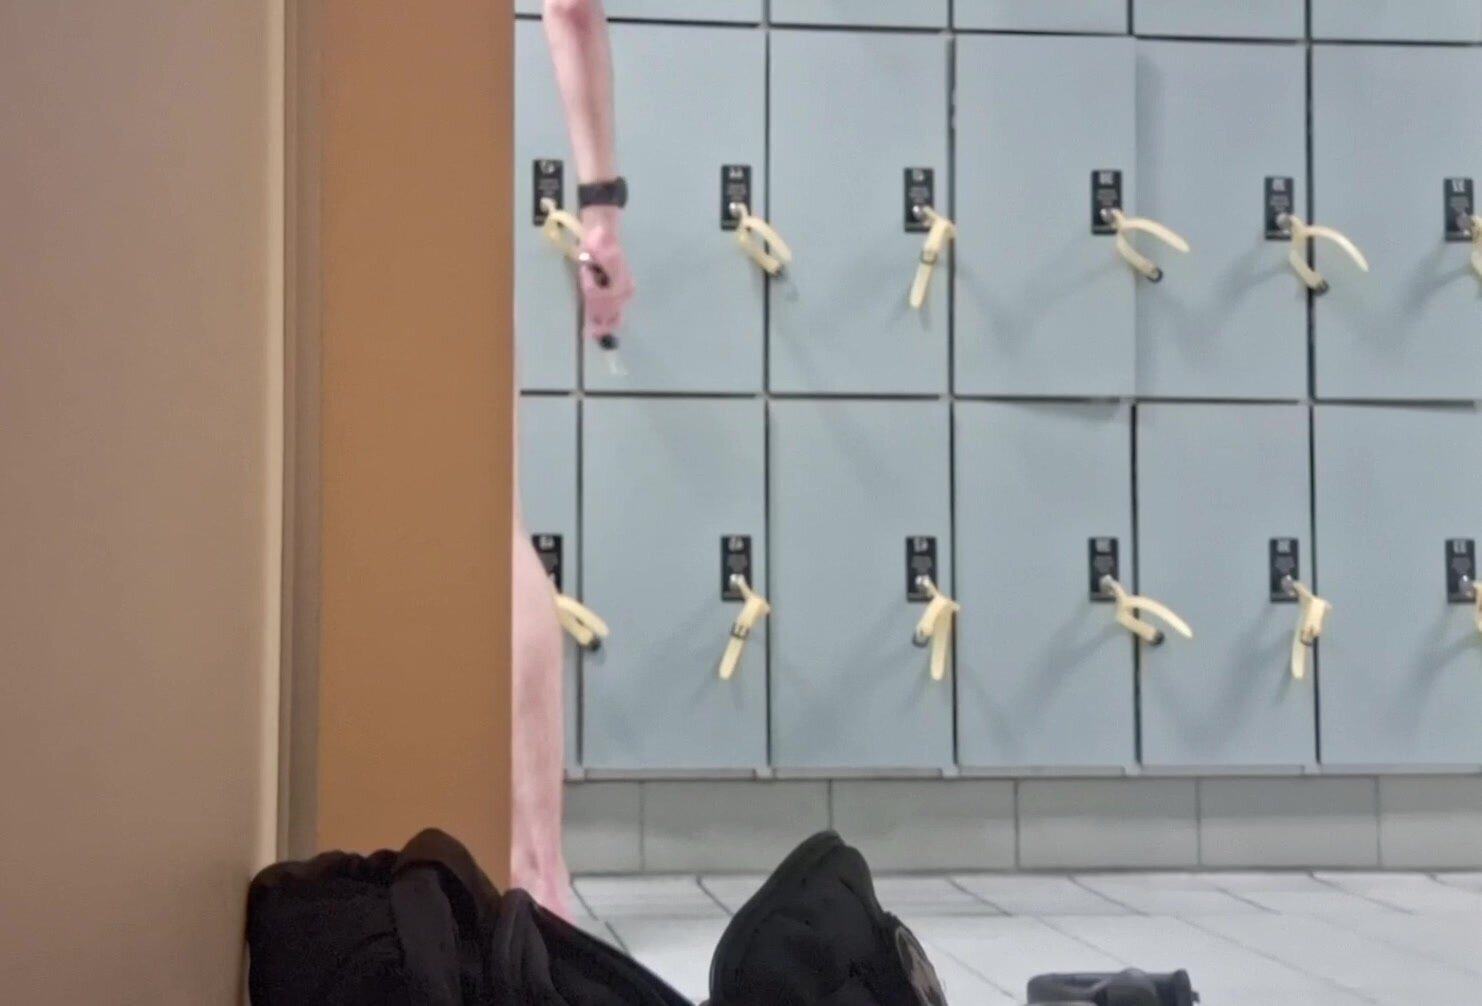 Guy grabbing key from locker nude